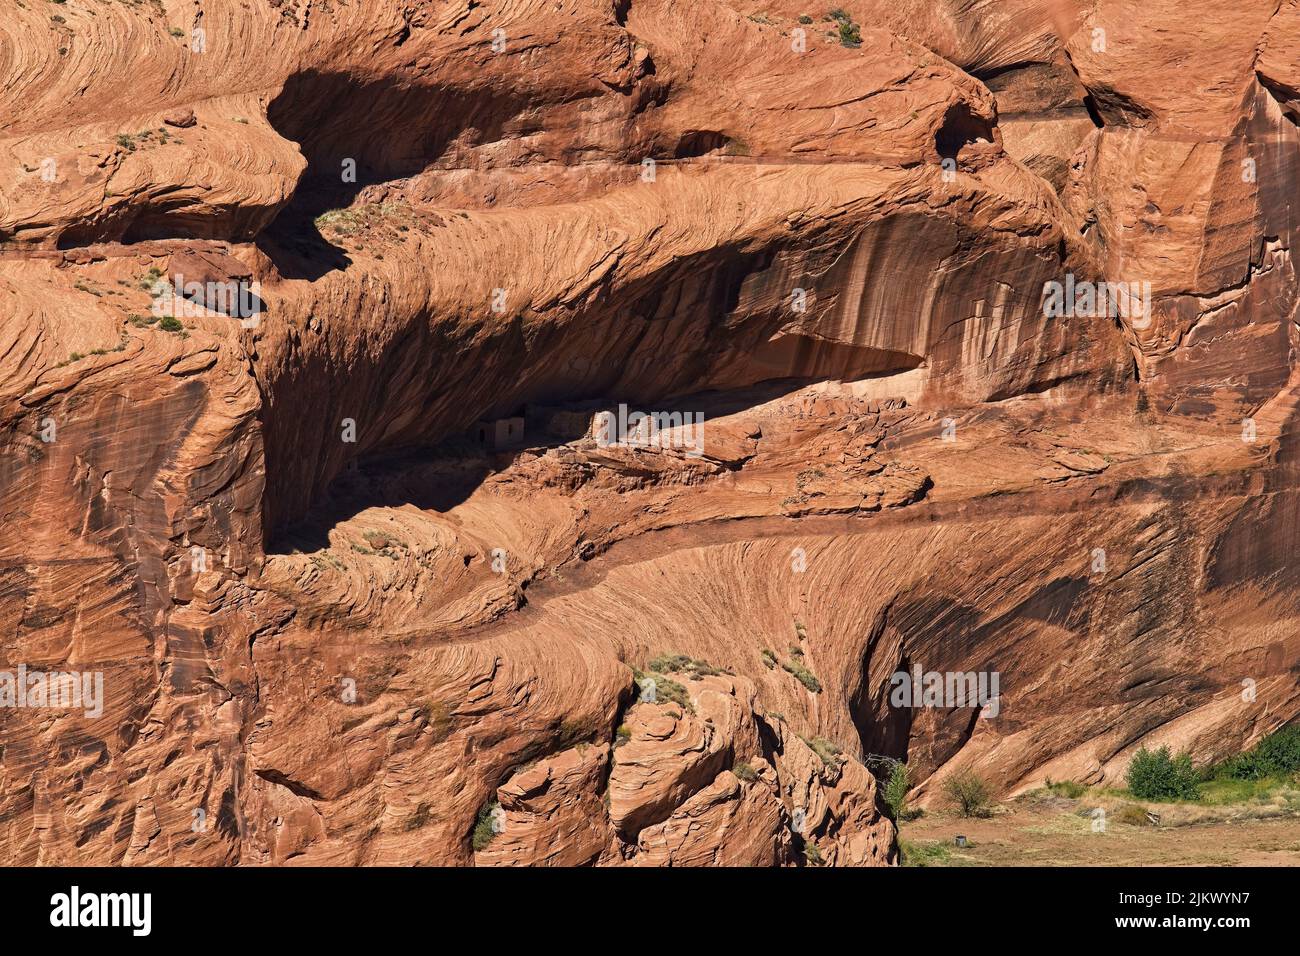 Native American cliff dwellings at Canyon de Chelle, Arizona Stock Photo